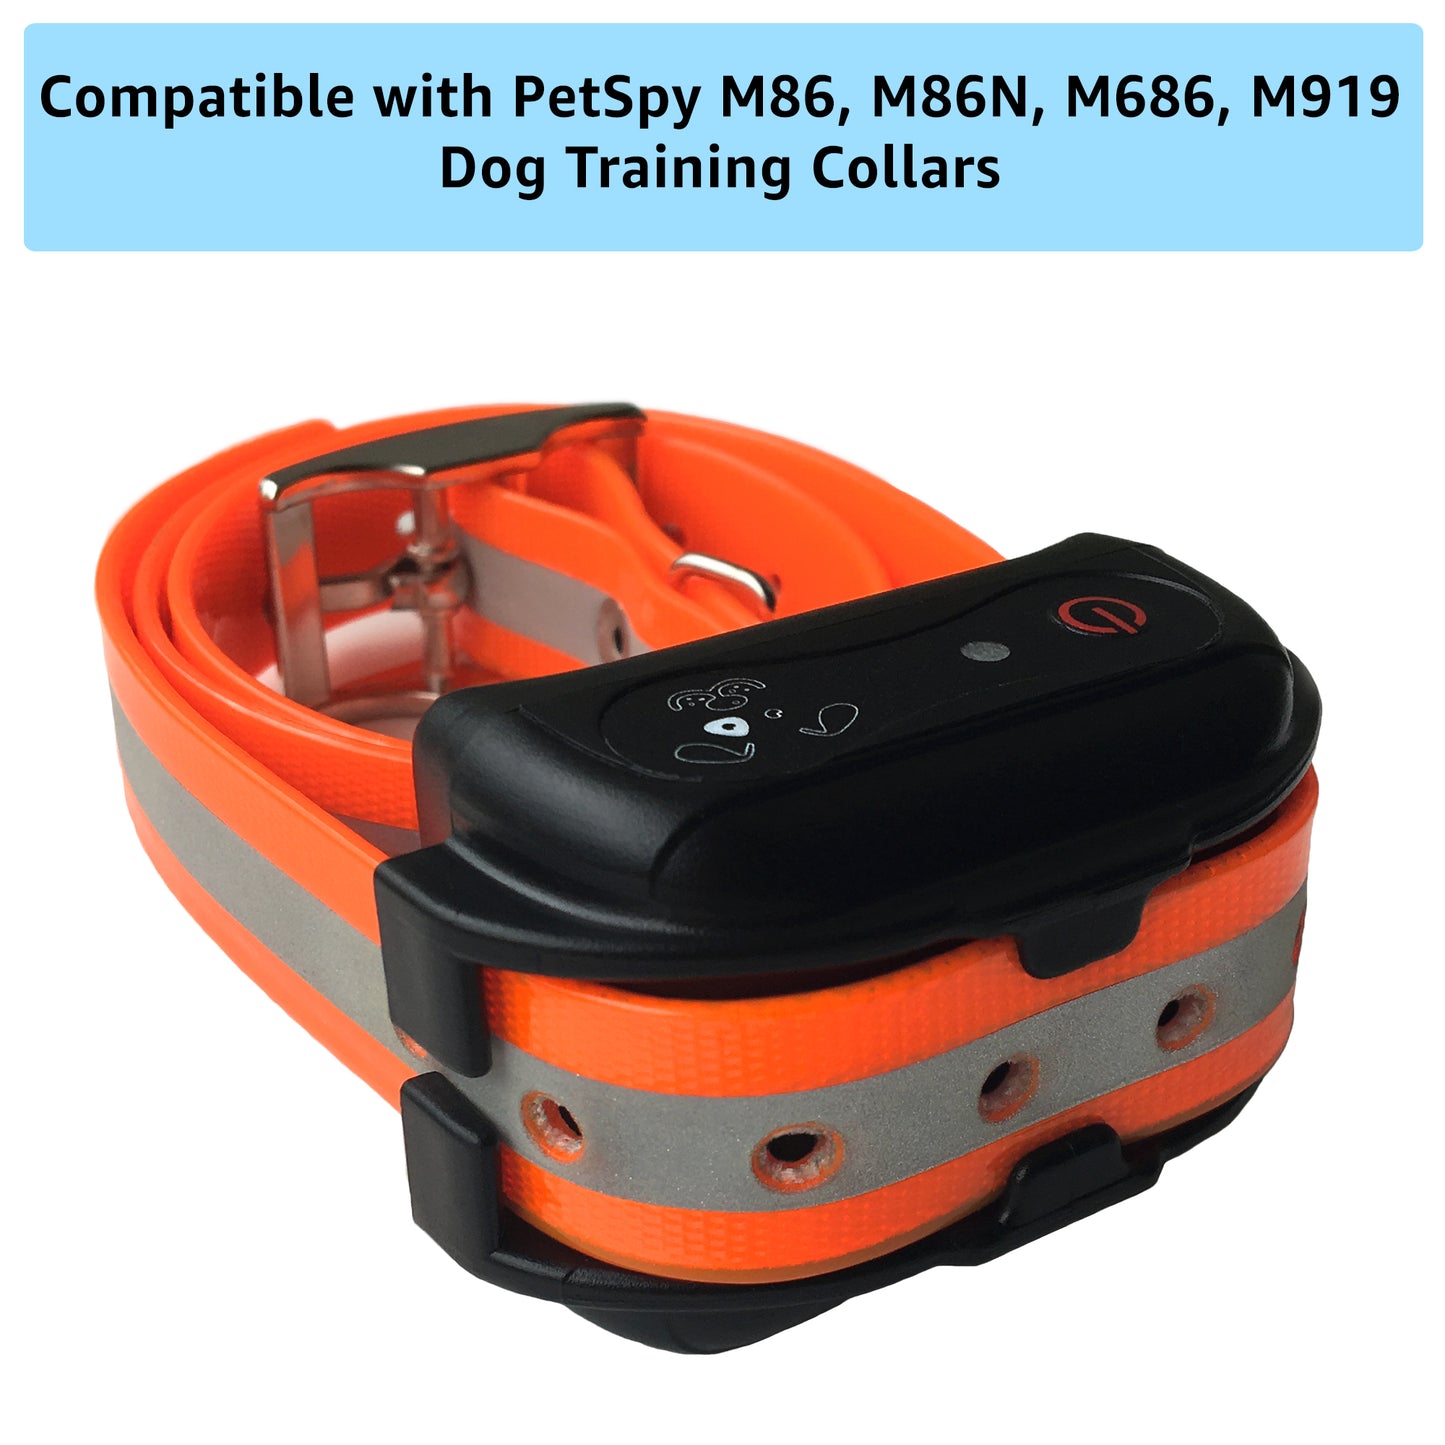 Reflective Dog Training Collar compatible with PetSpy M86 M86N M686 M919 dog training collars